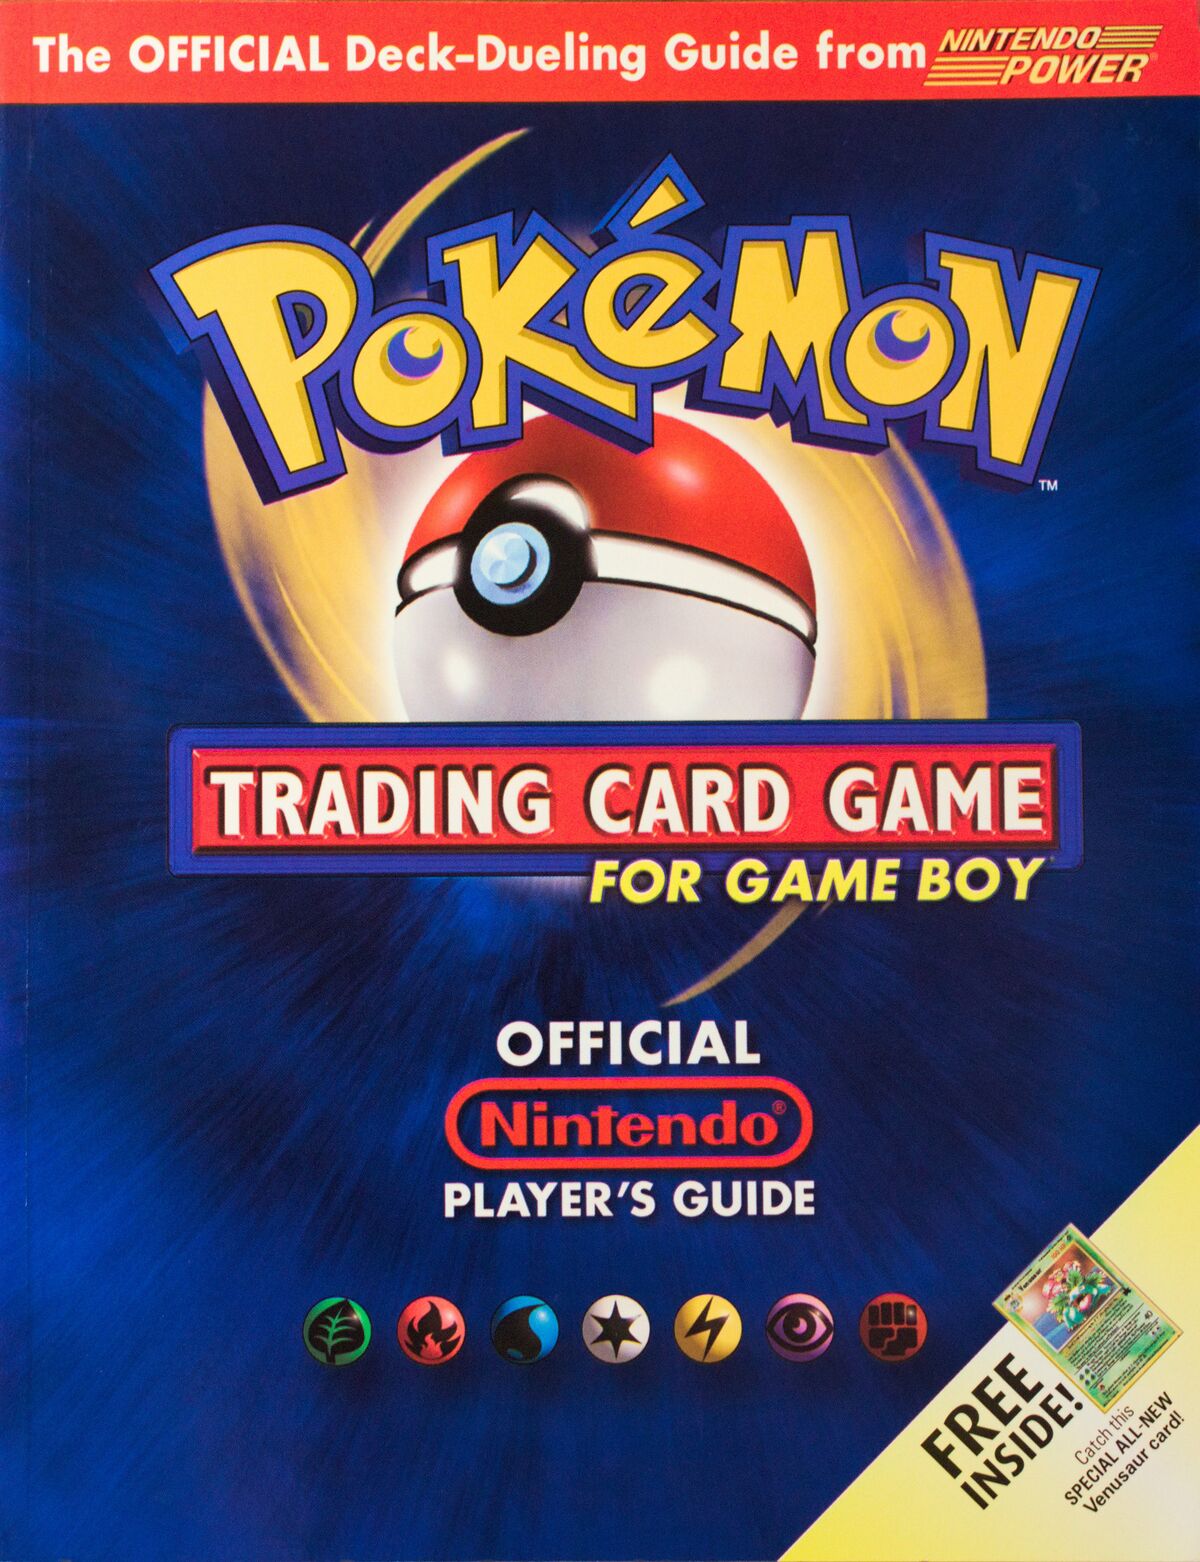 Pokémon Trading Card Official Nintendo Player's Guide - Bulbapedia, the community-driven Pokémon encyclopedia